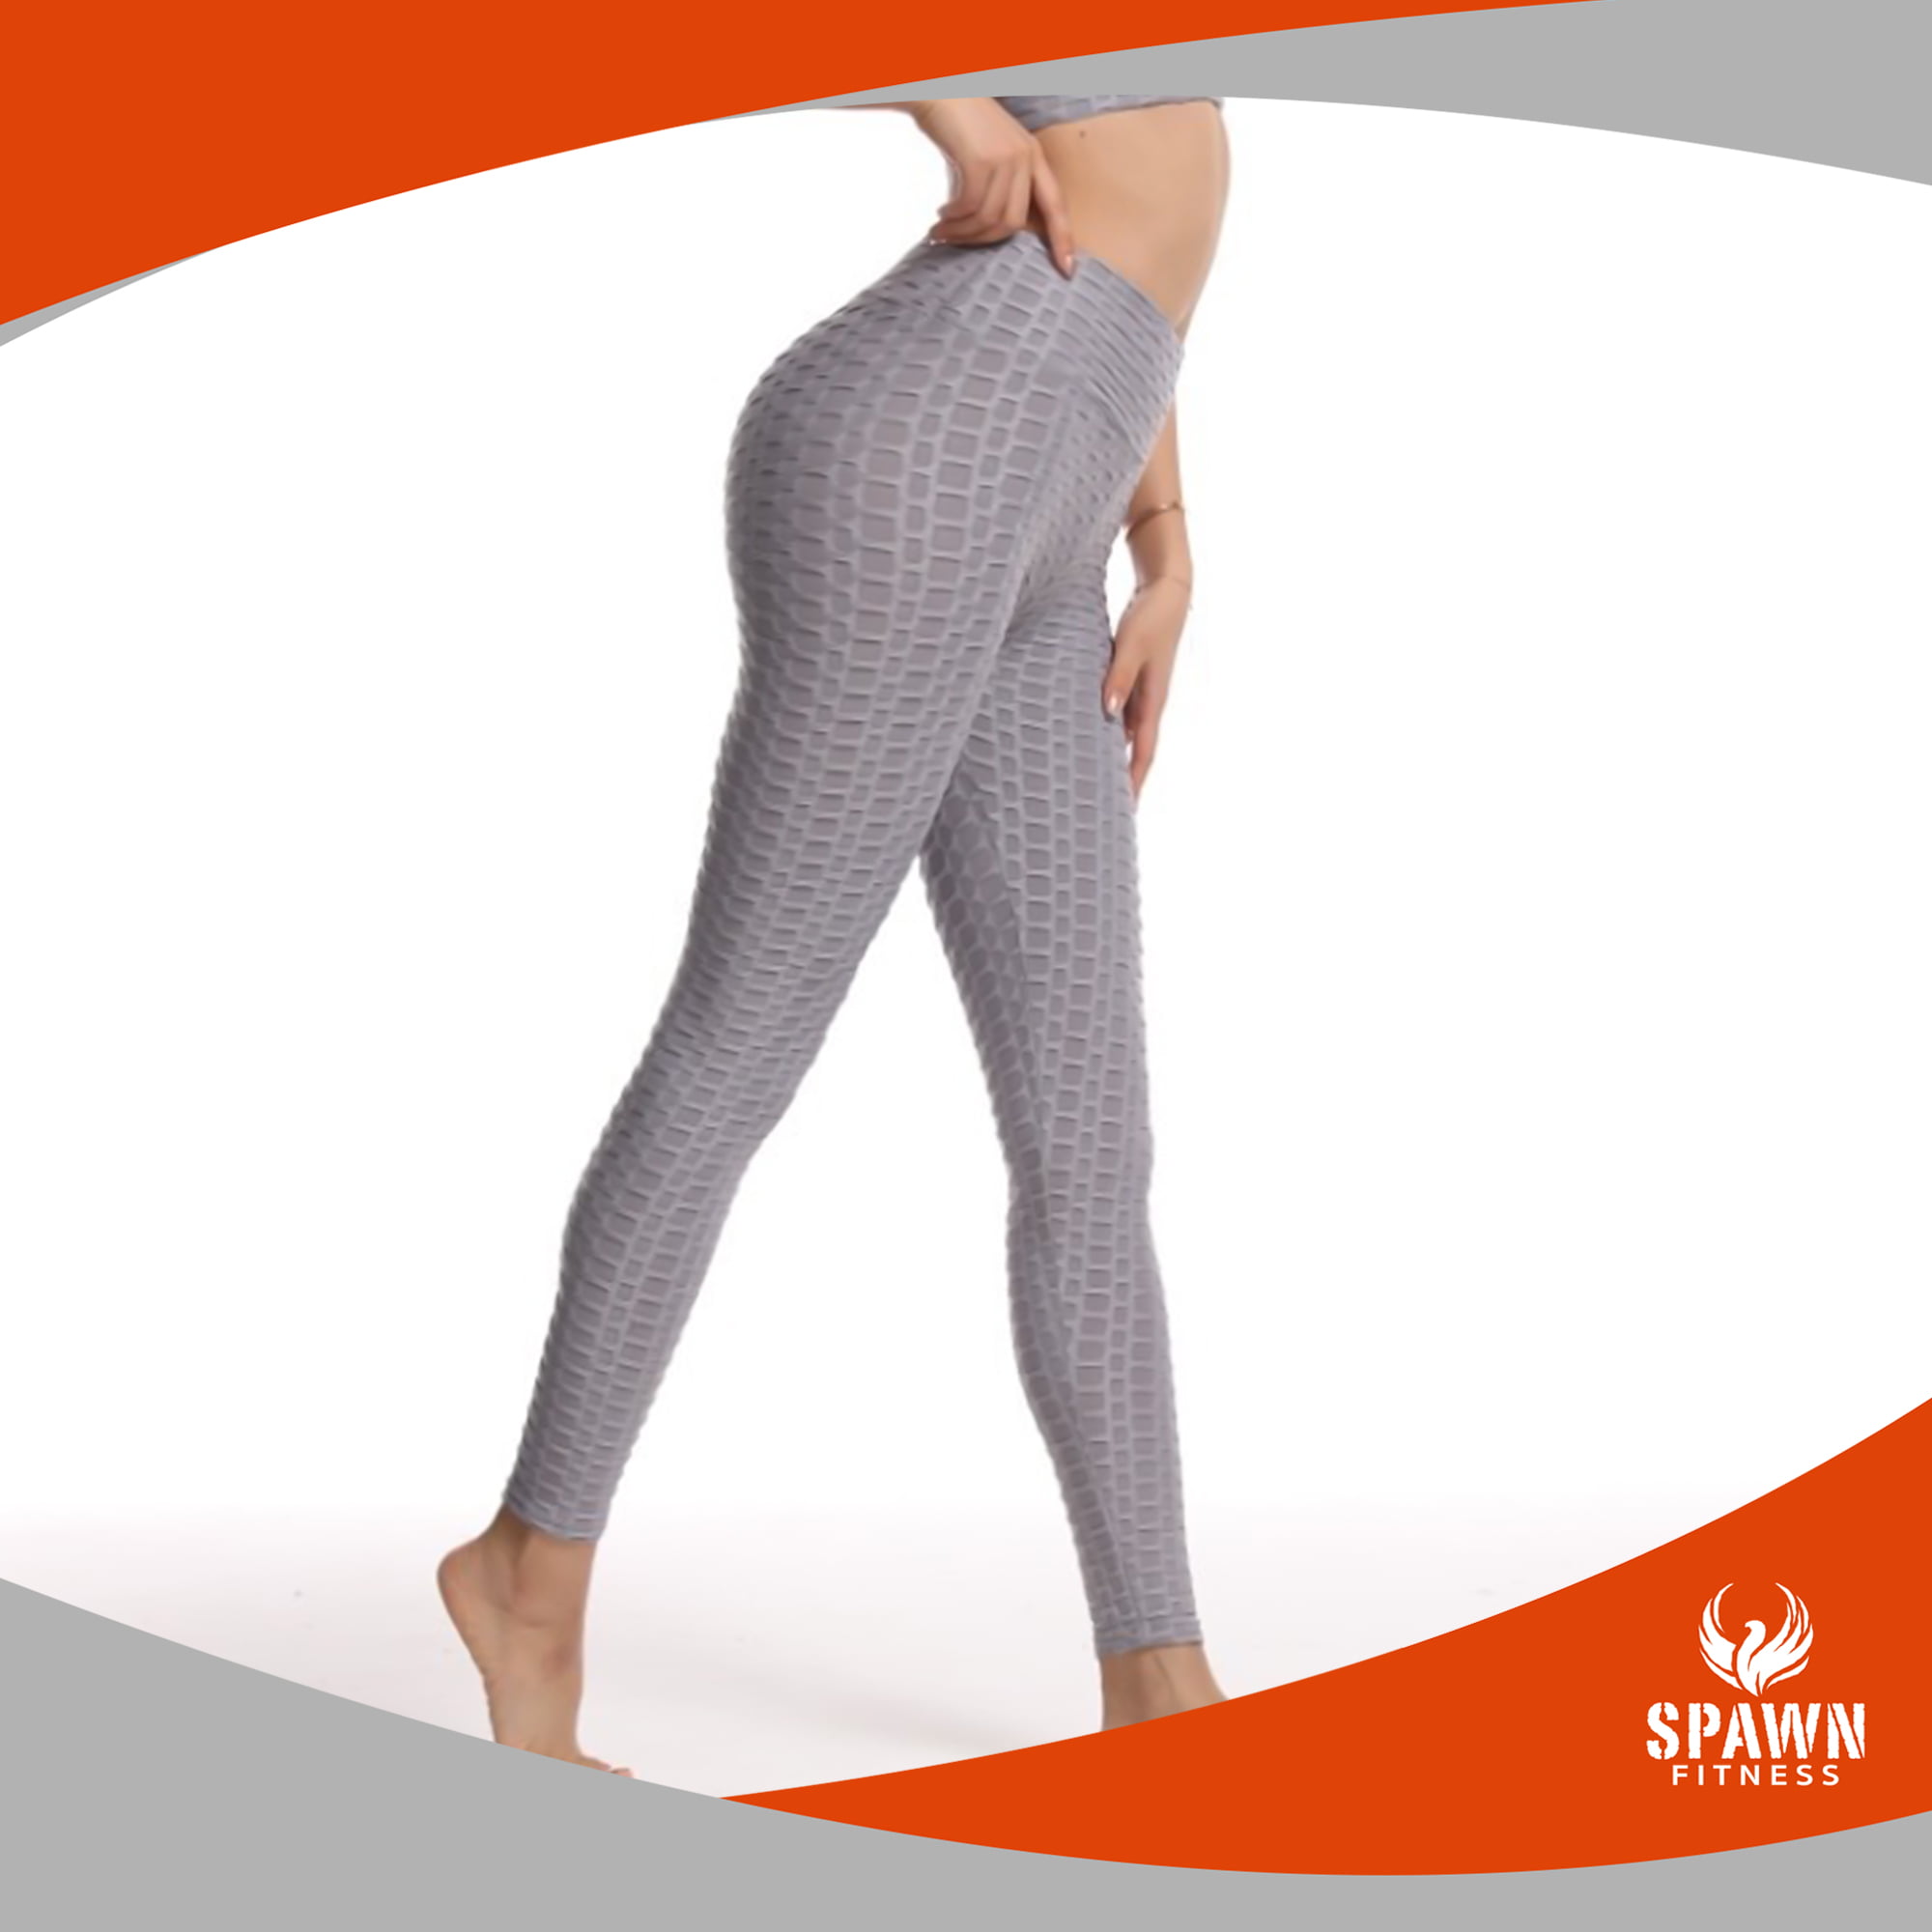 Spawn Fitness Yoga Pants TikTok Leggings for Women Butt Lifting Gray XS 